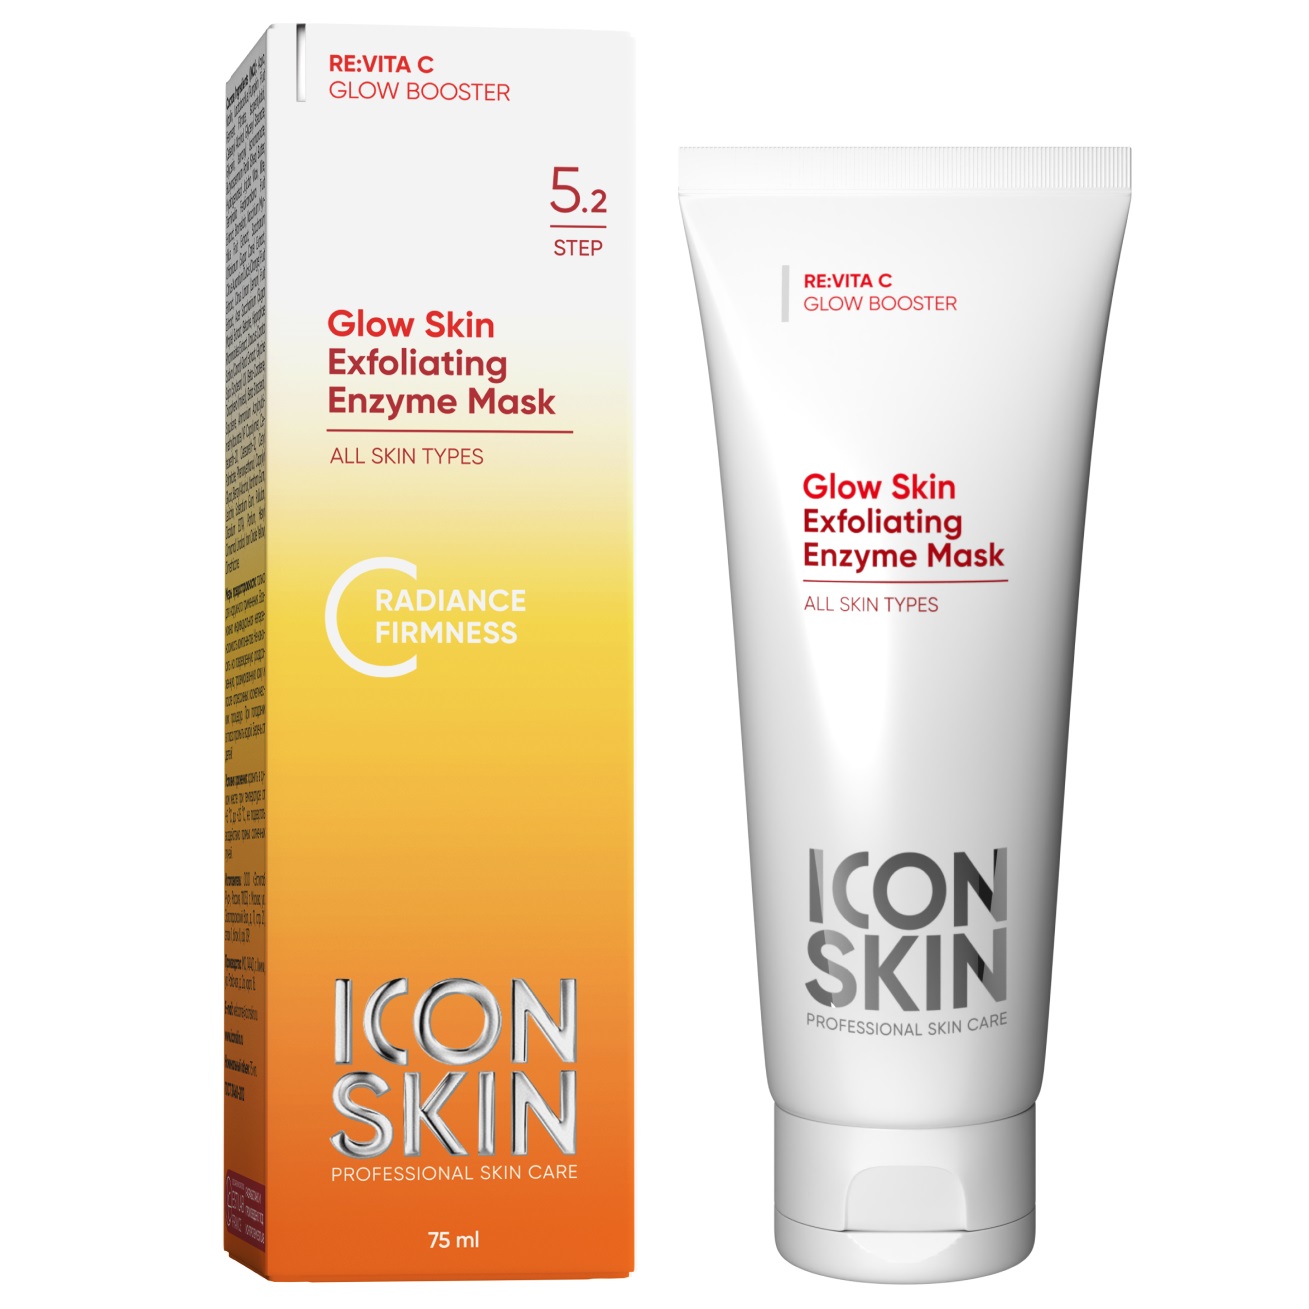 Icon Skin Энзимная очищающая маска-гоммаж Glow Skin, 75 мл (Icon Skin, Re:Vita C) энзимная очищающая маска гоммаж icon skin glow skin exfoliating enzyme mask 75 мл